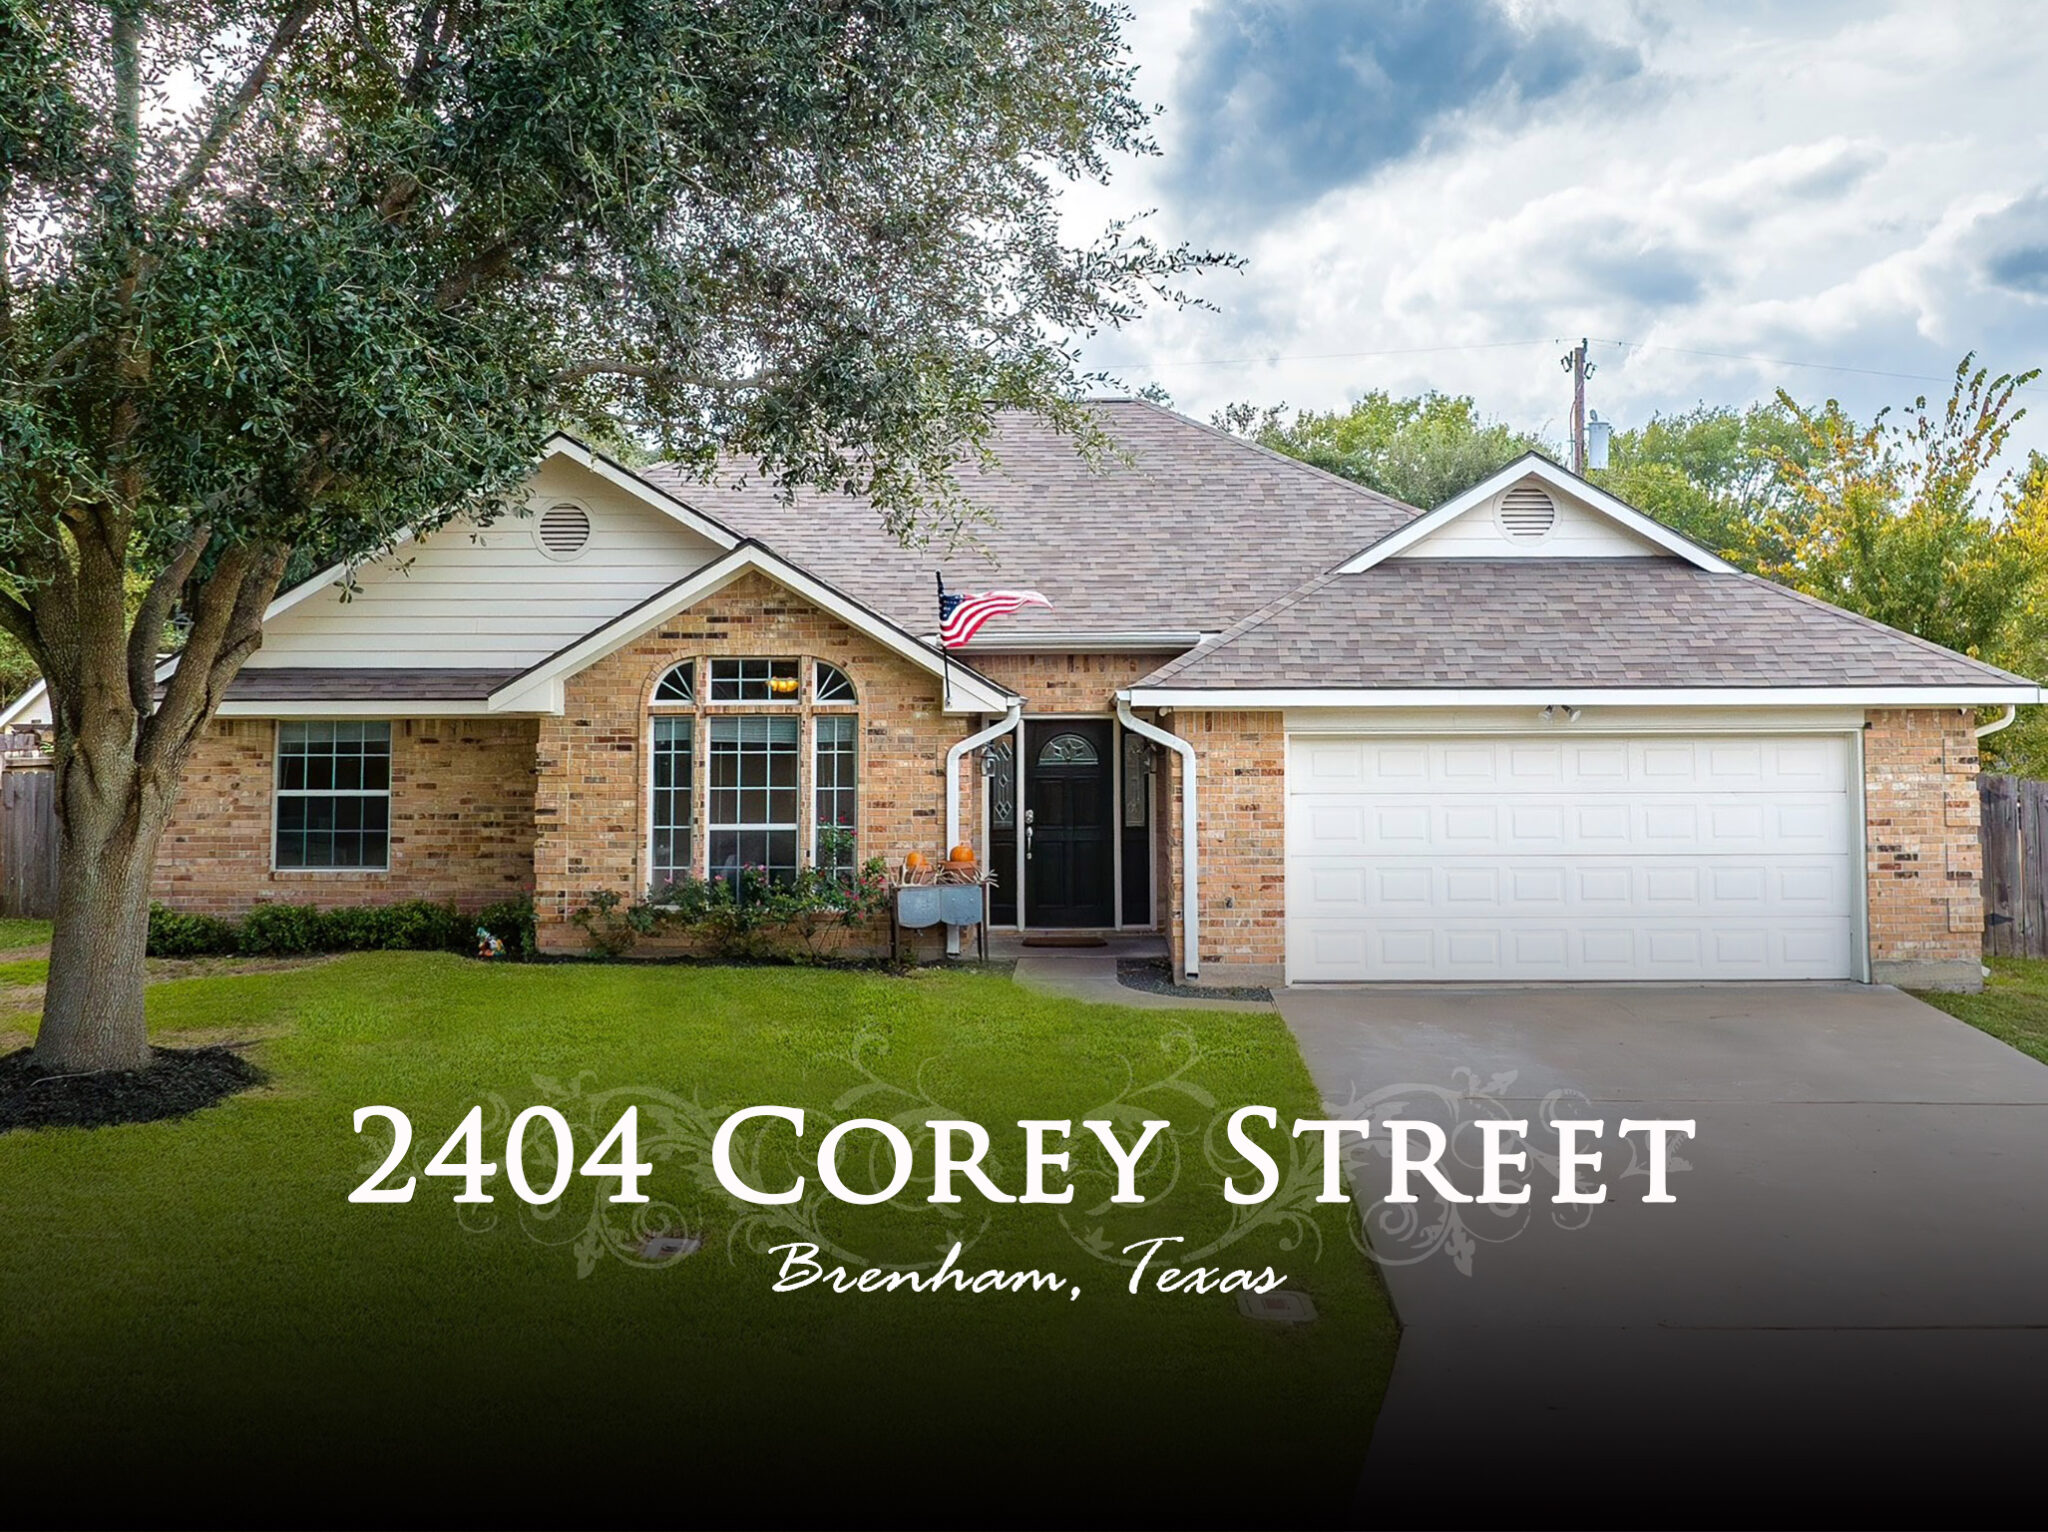 2404 Corey Street Brenham, Texas 77833